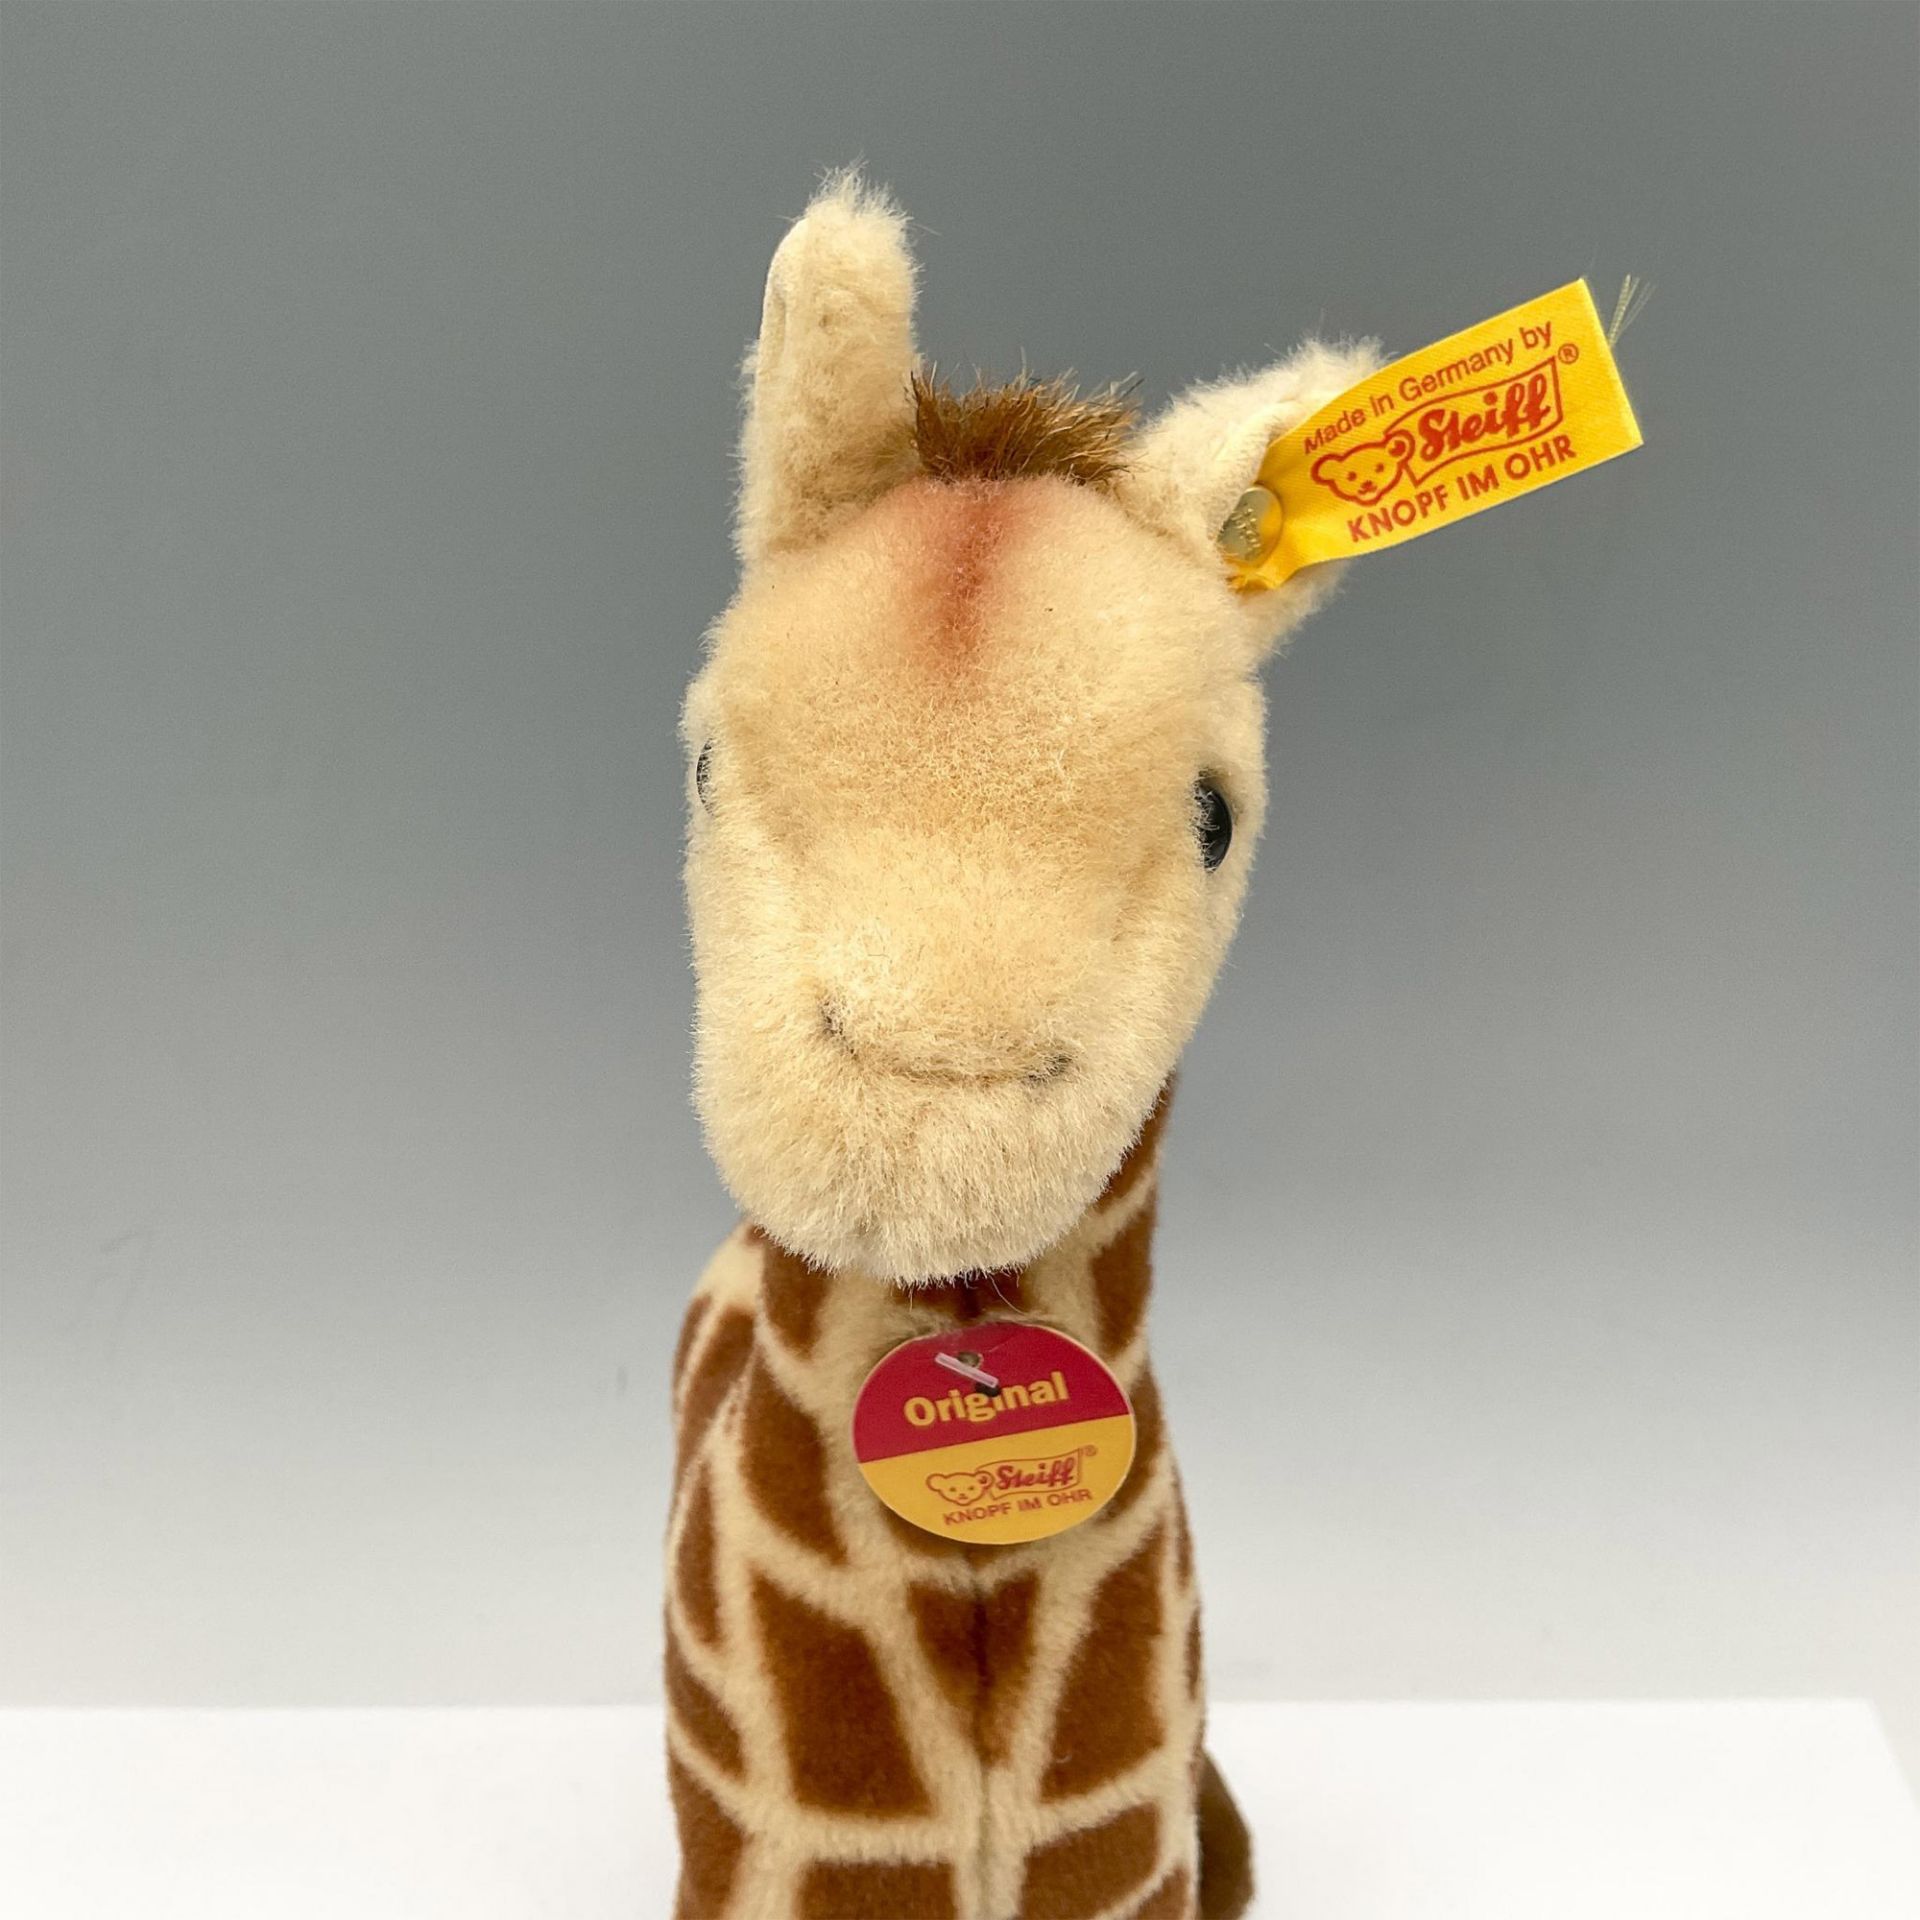 Steiff Plush Toy, Giraffe - Image 4 of 4